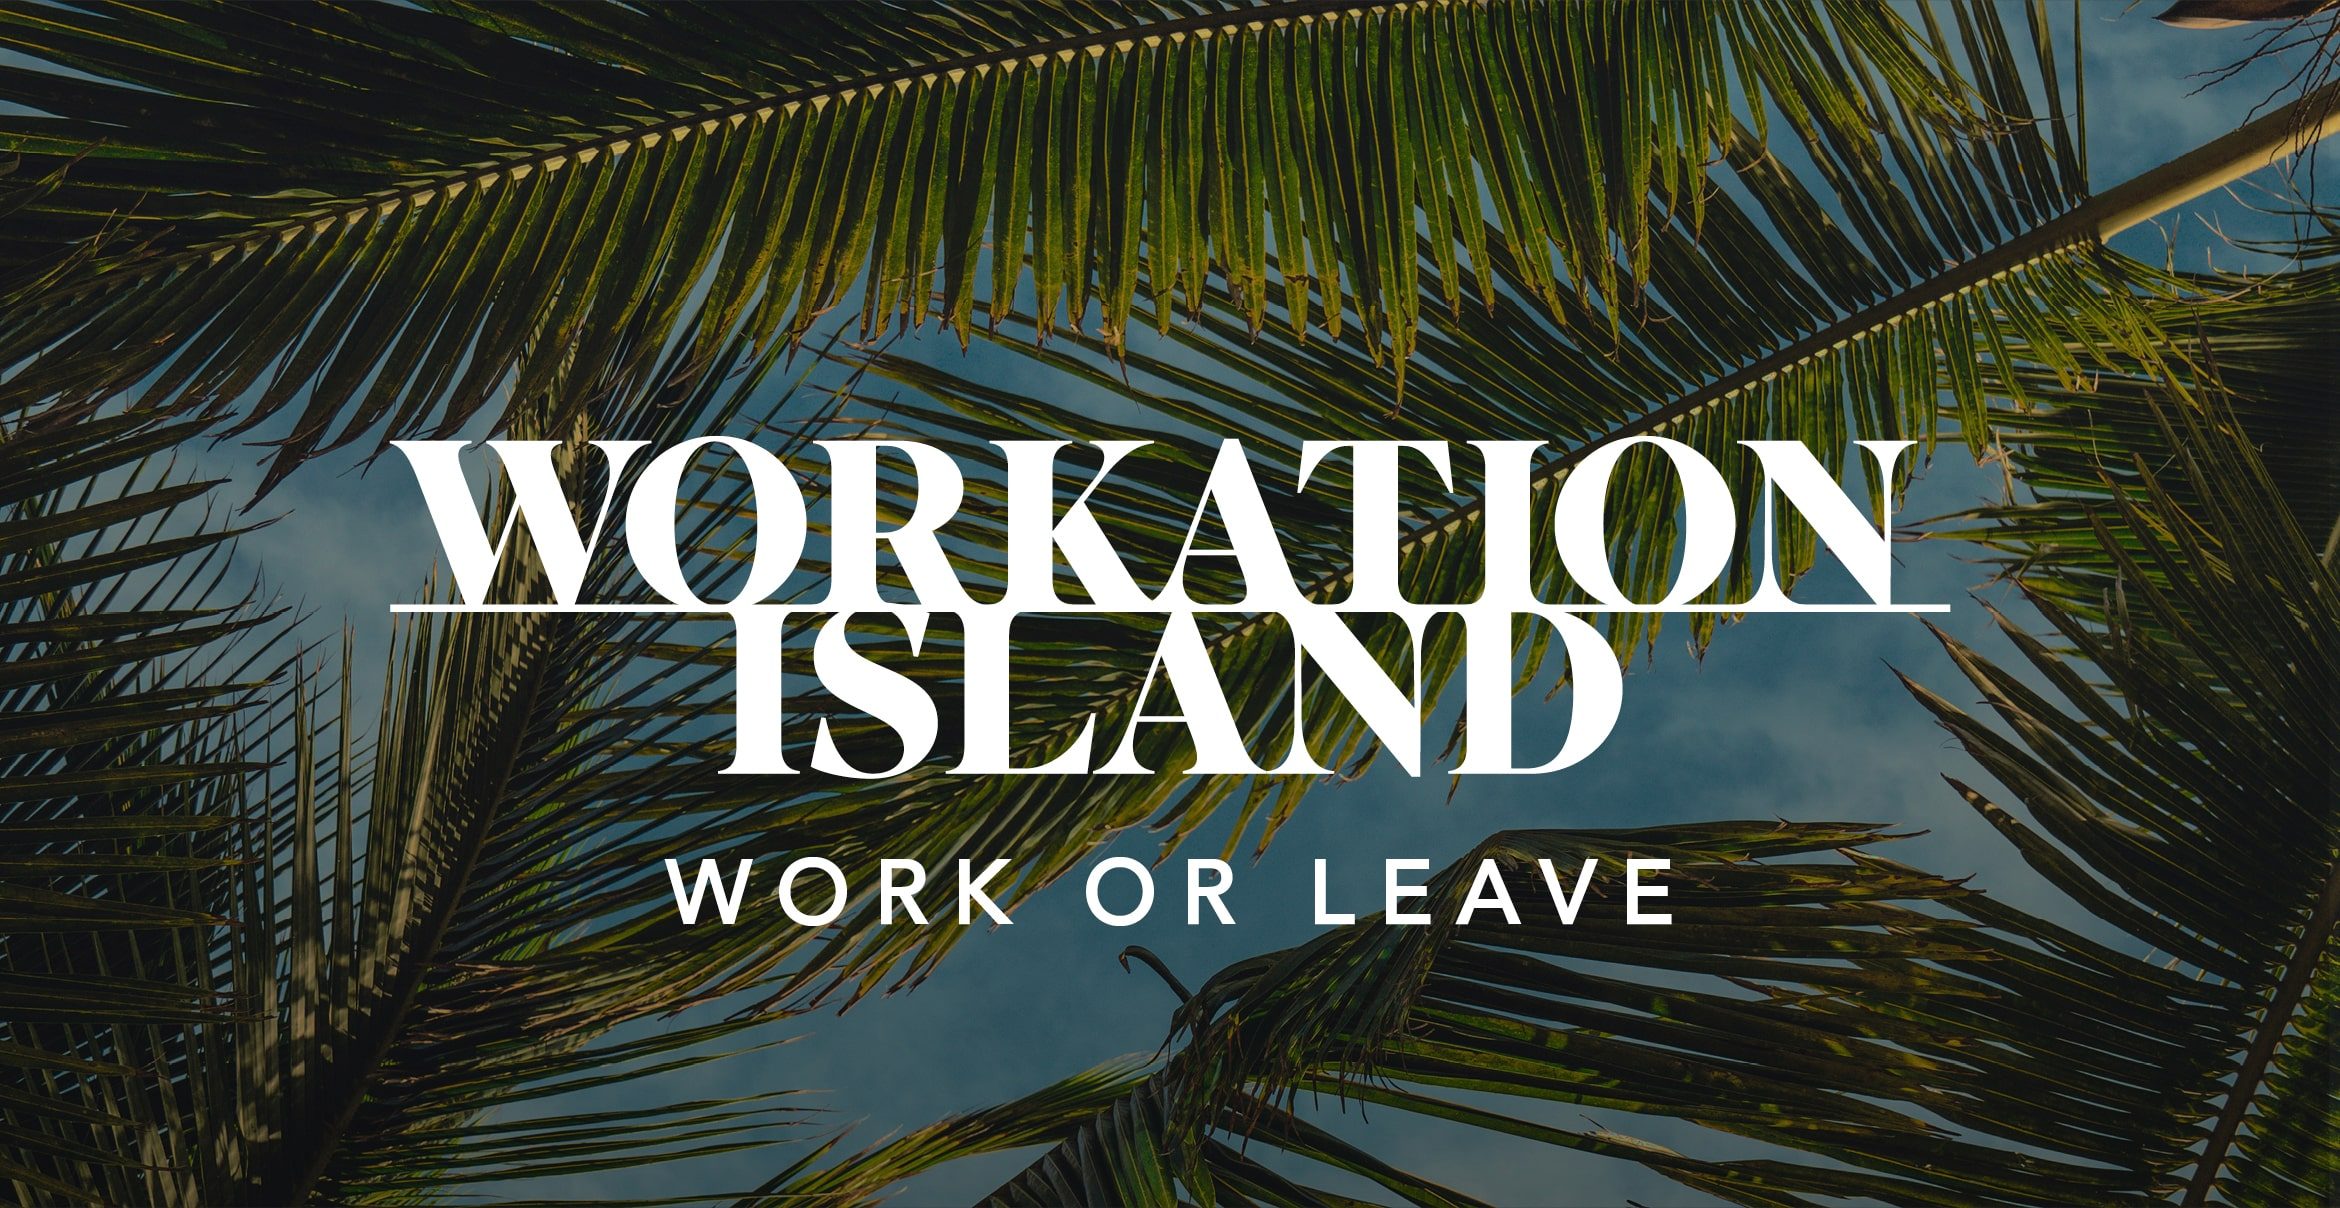 Business-Trash-TV: Workation Island